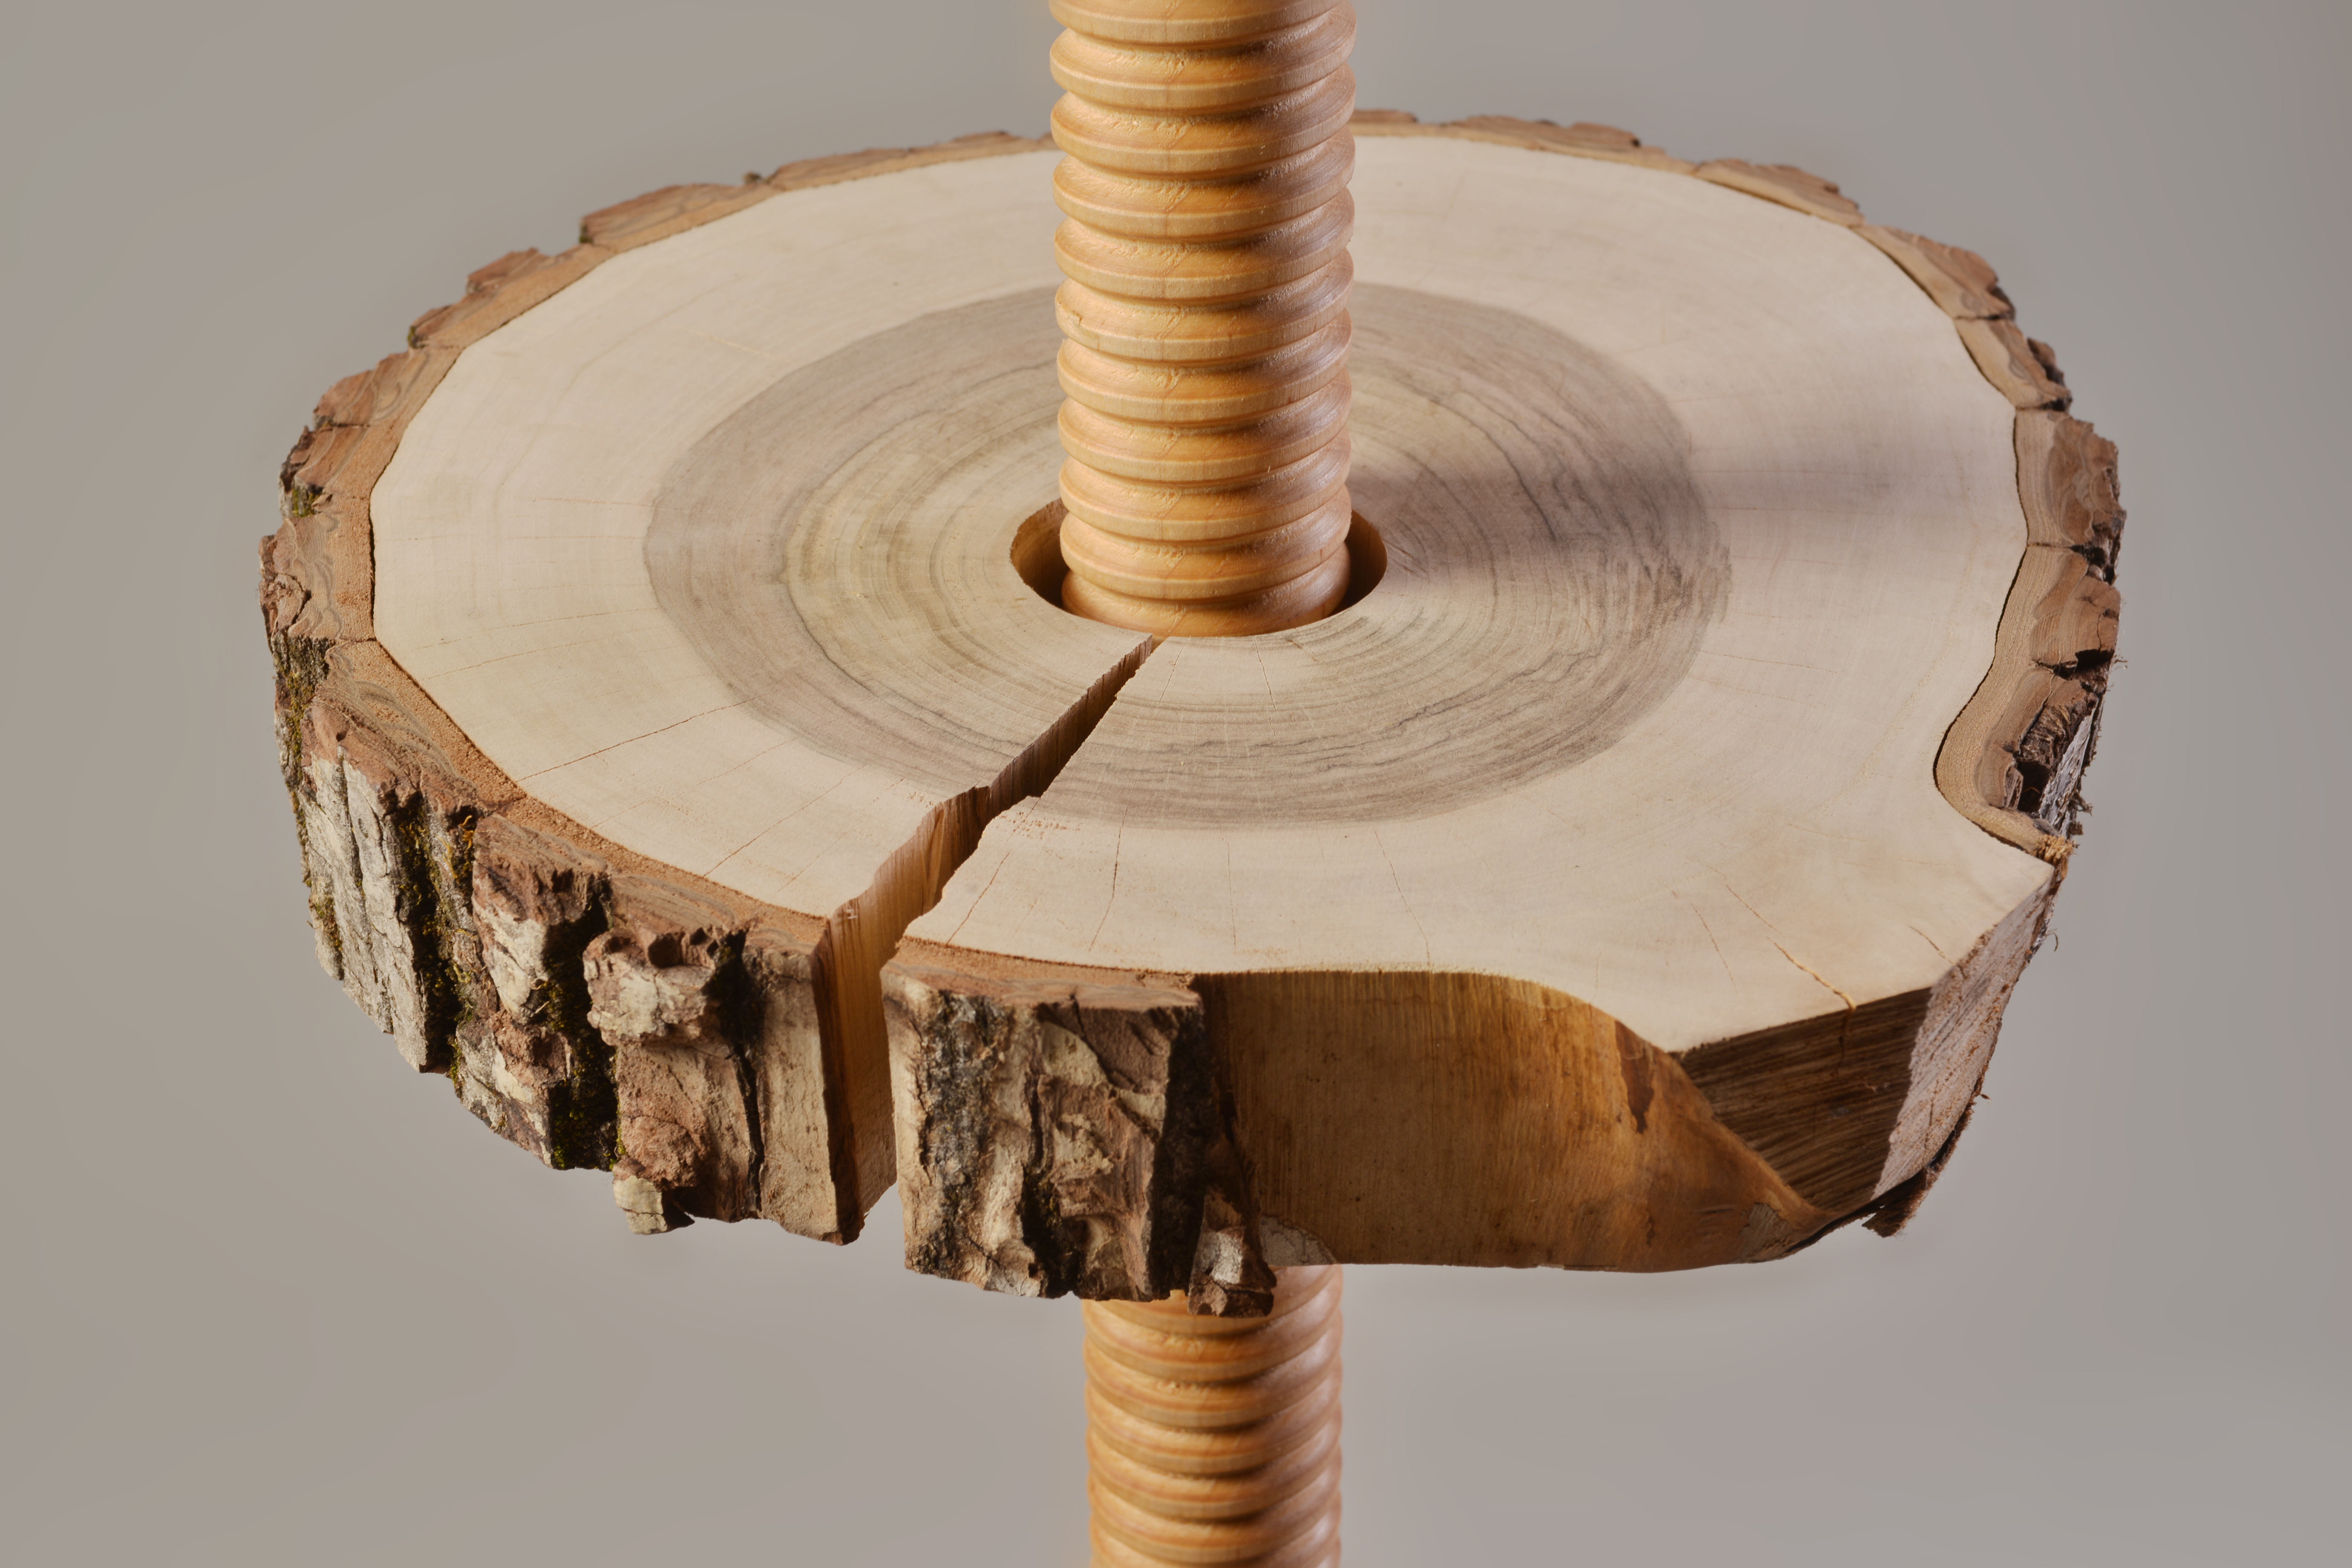 botellero de diseño de un tronco de árbol